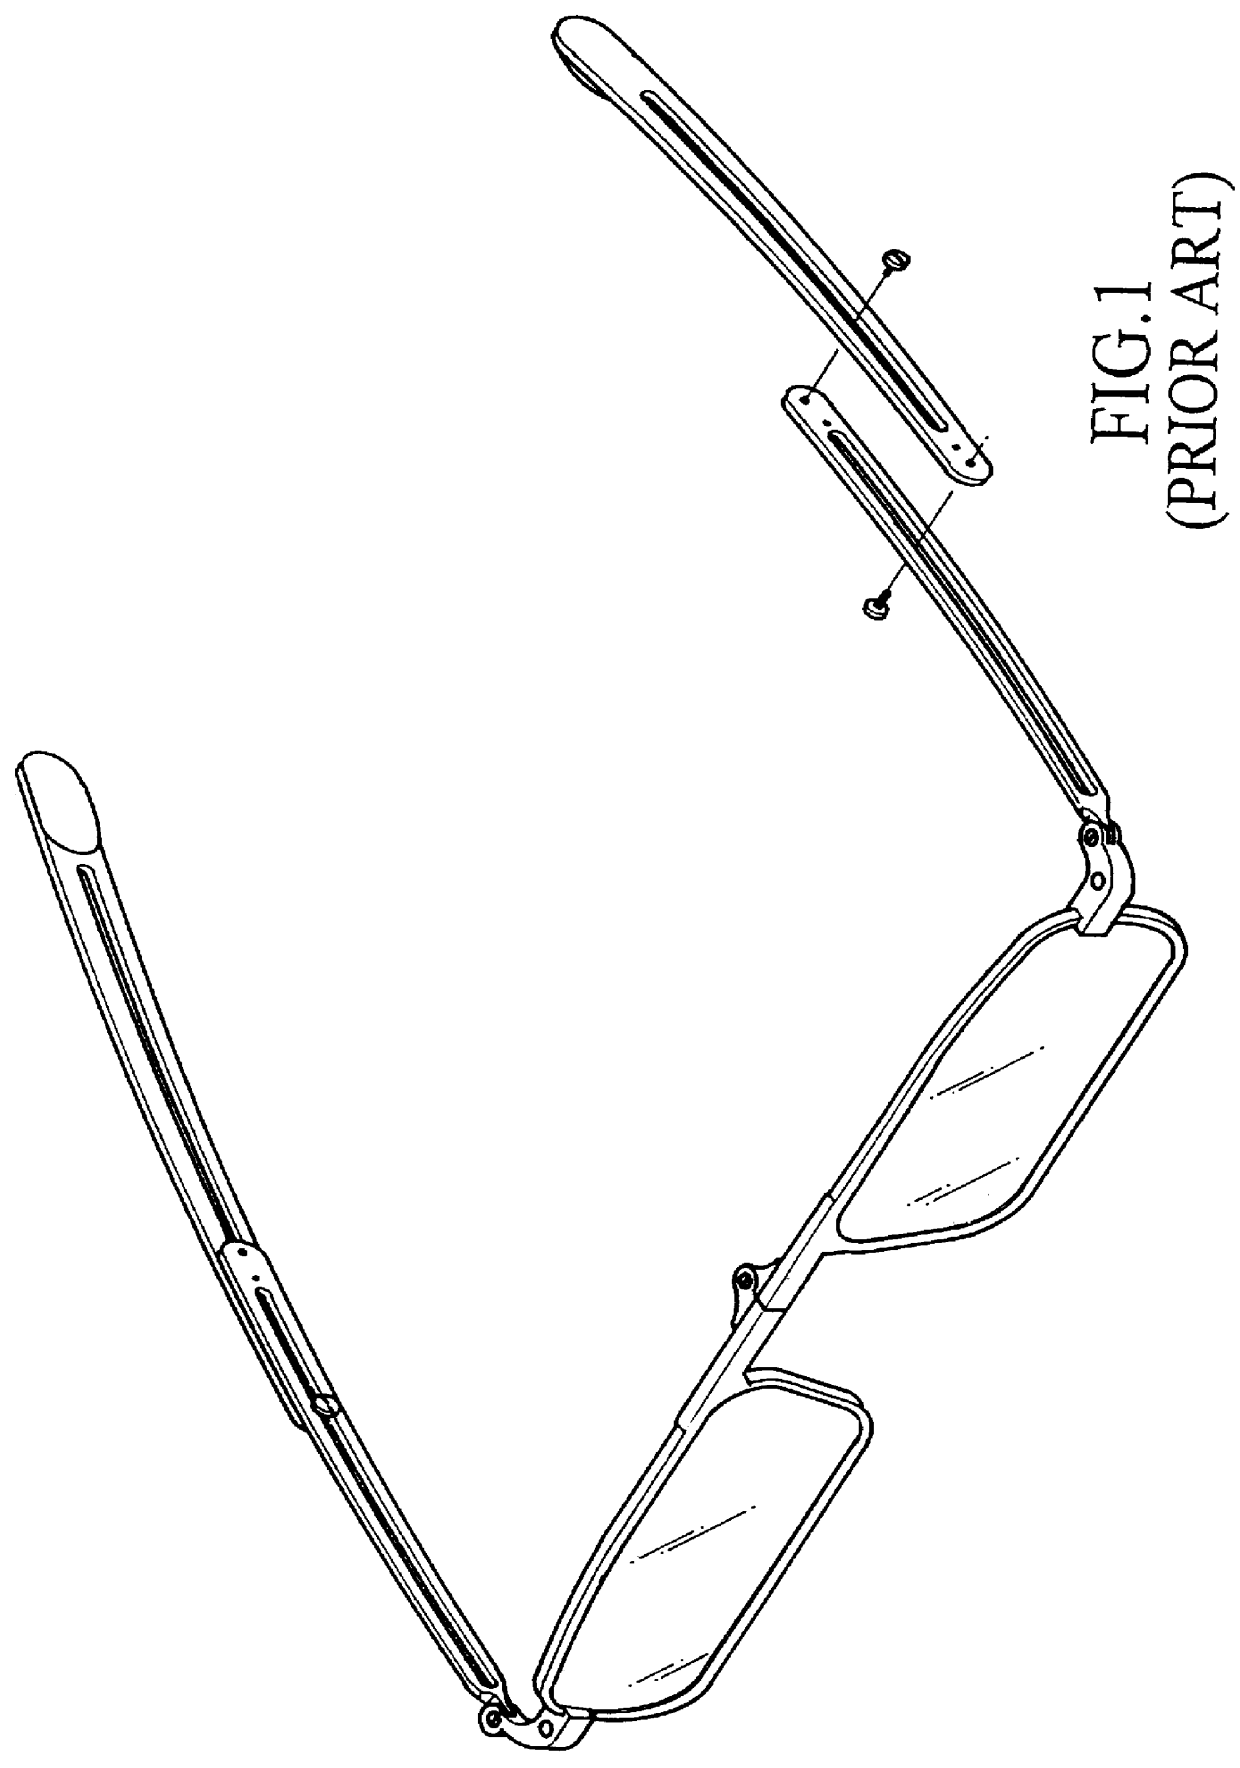 Foldable compact glasses